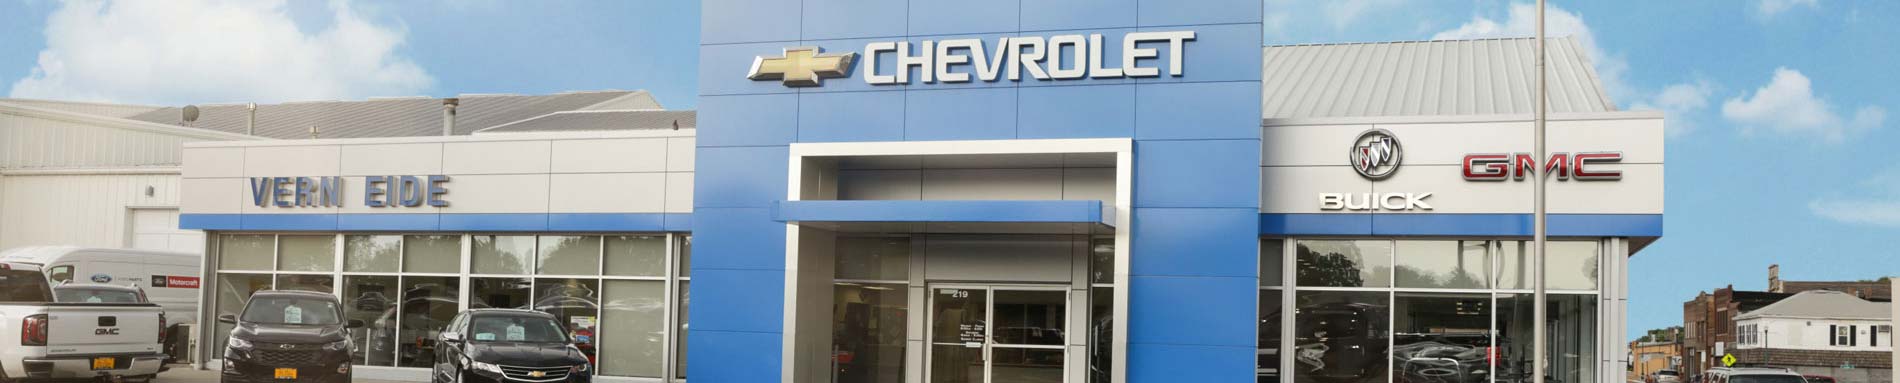 Vern Eide Chevrolet GMC